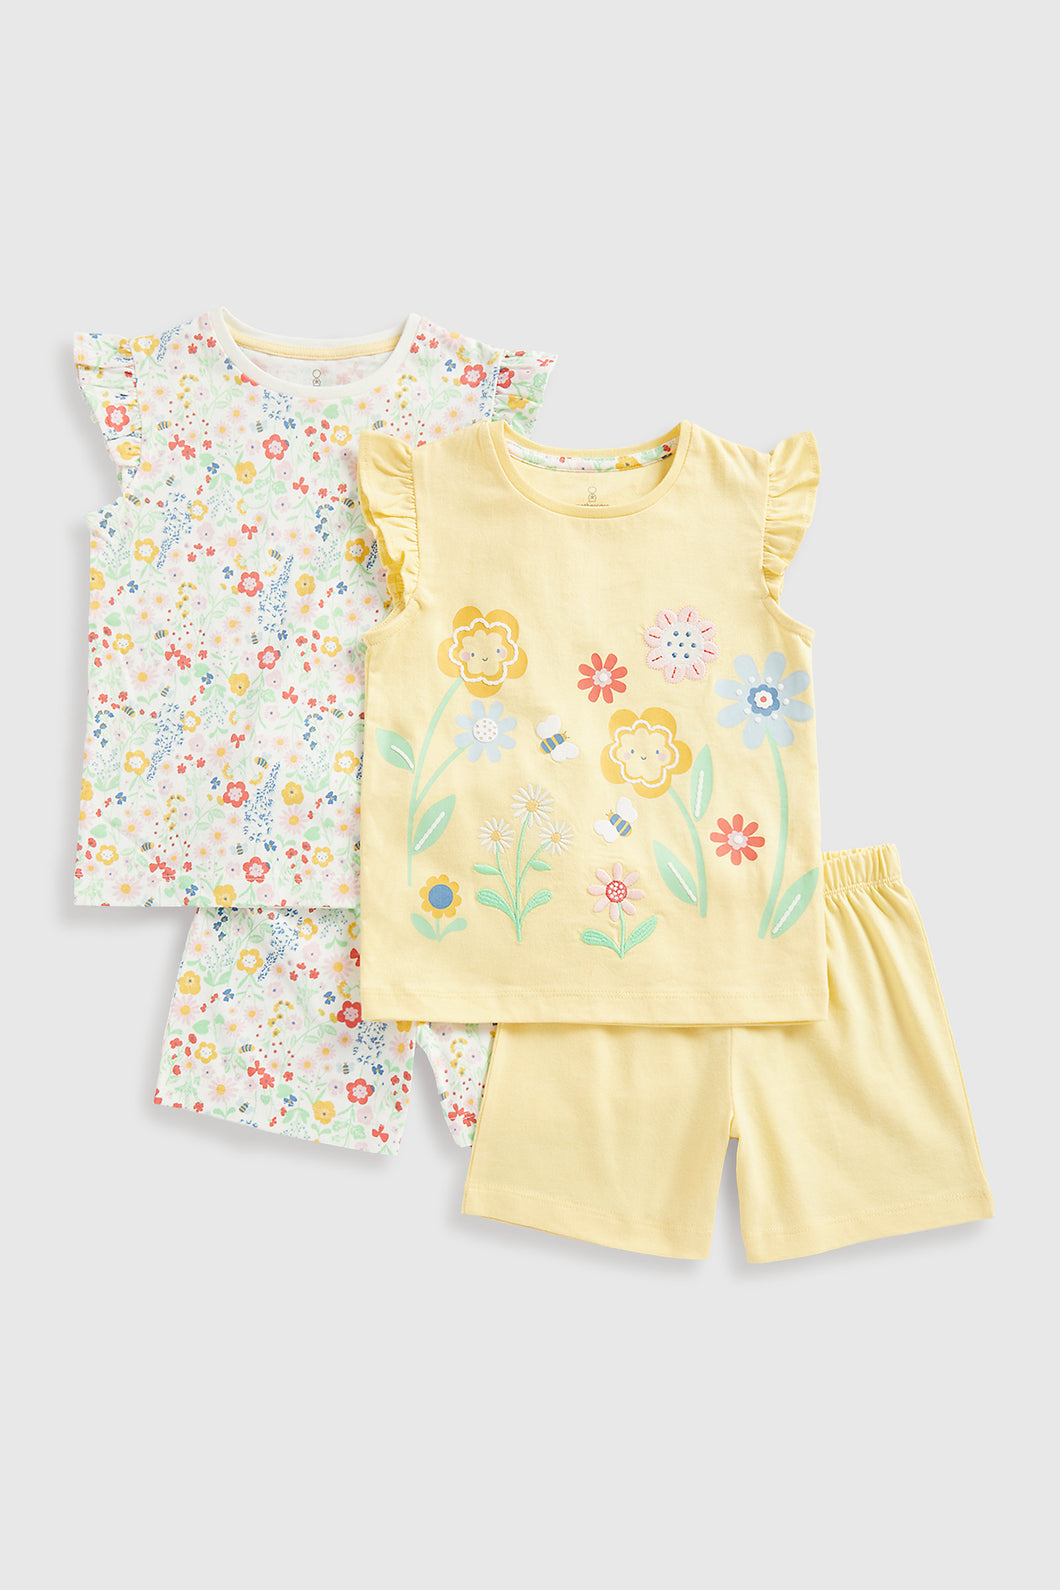 Mothercare Floral Shortie Pyjamas - 2 Pack